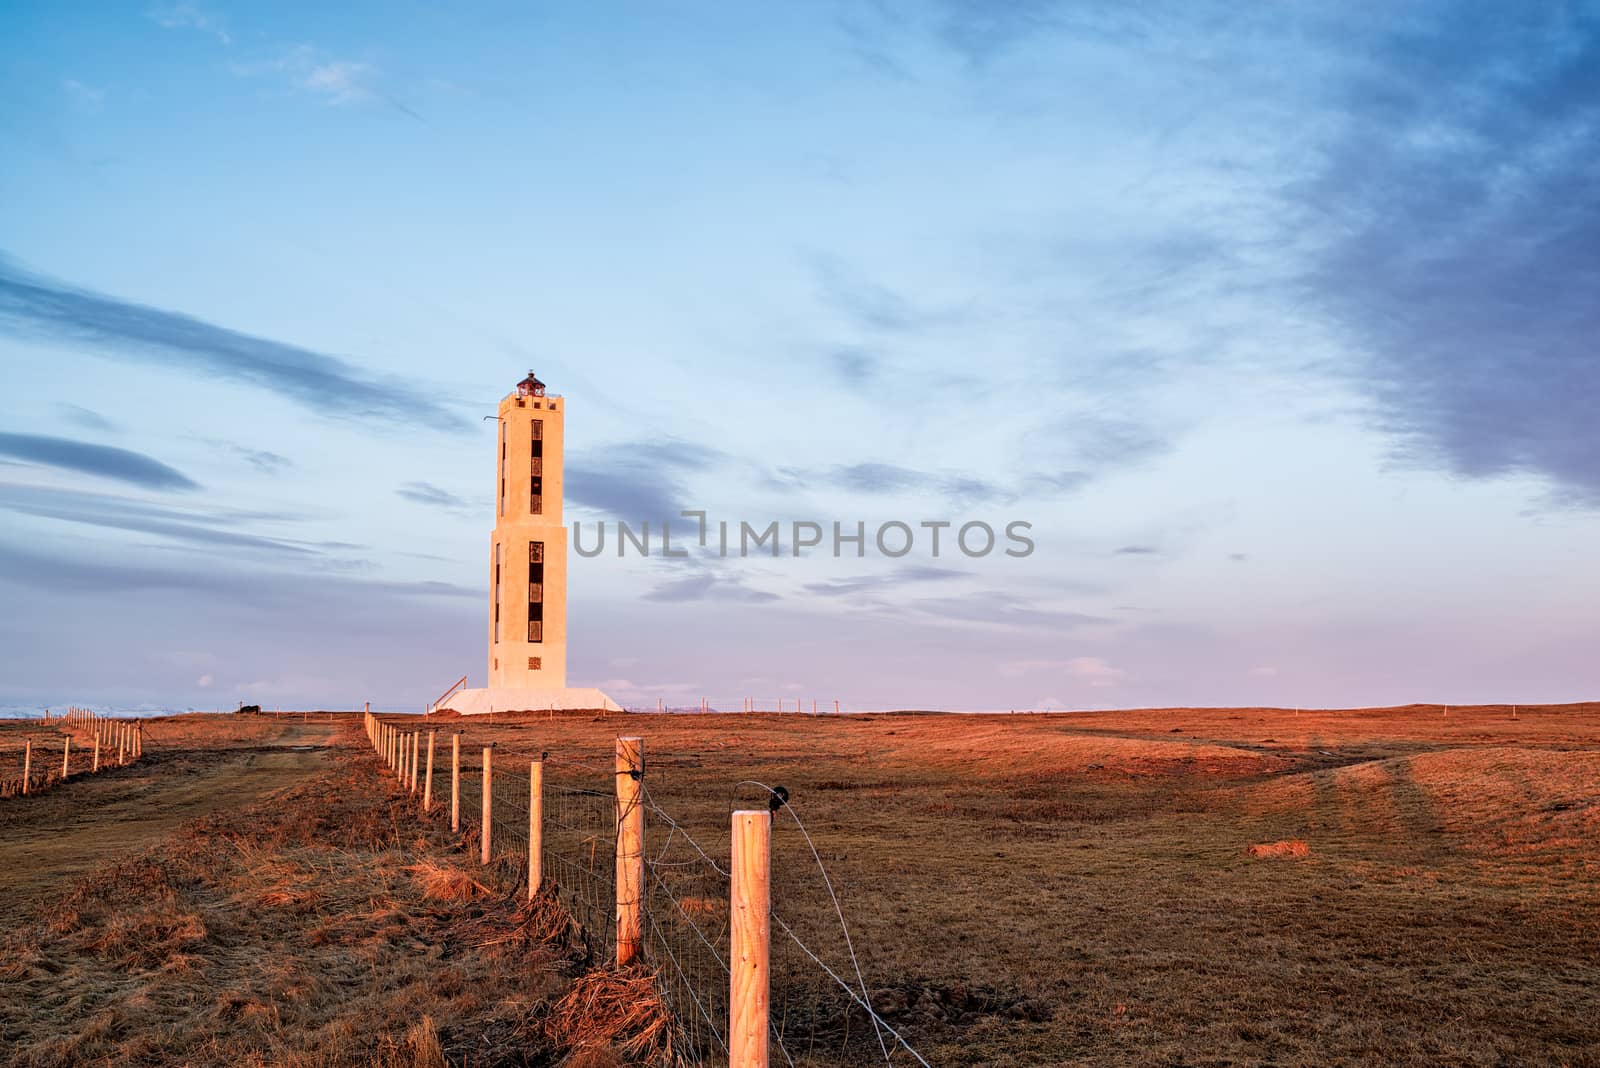 Knarraros lighthouse in rural area near Stokkseyri, Iceland